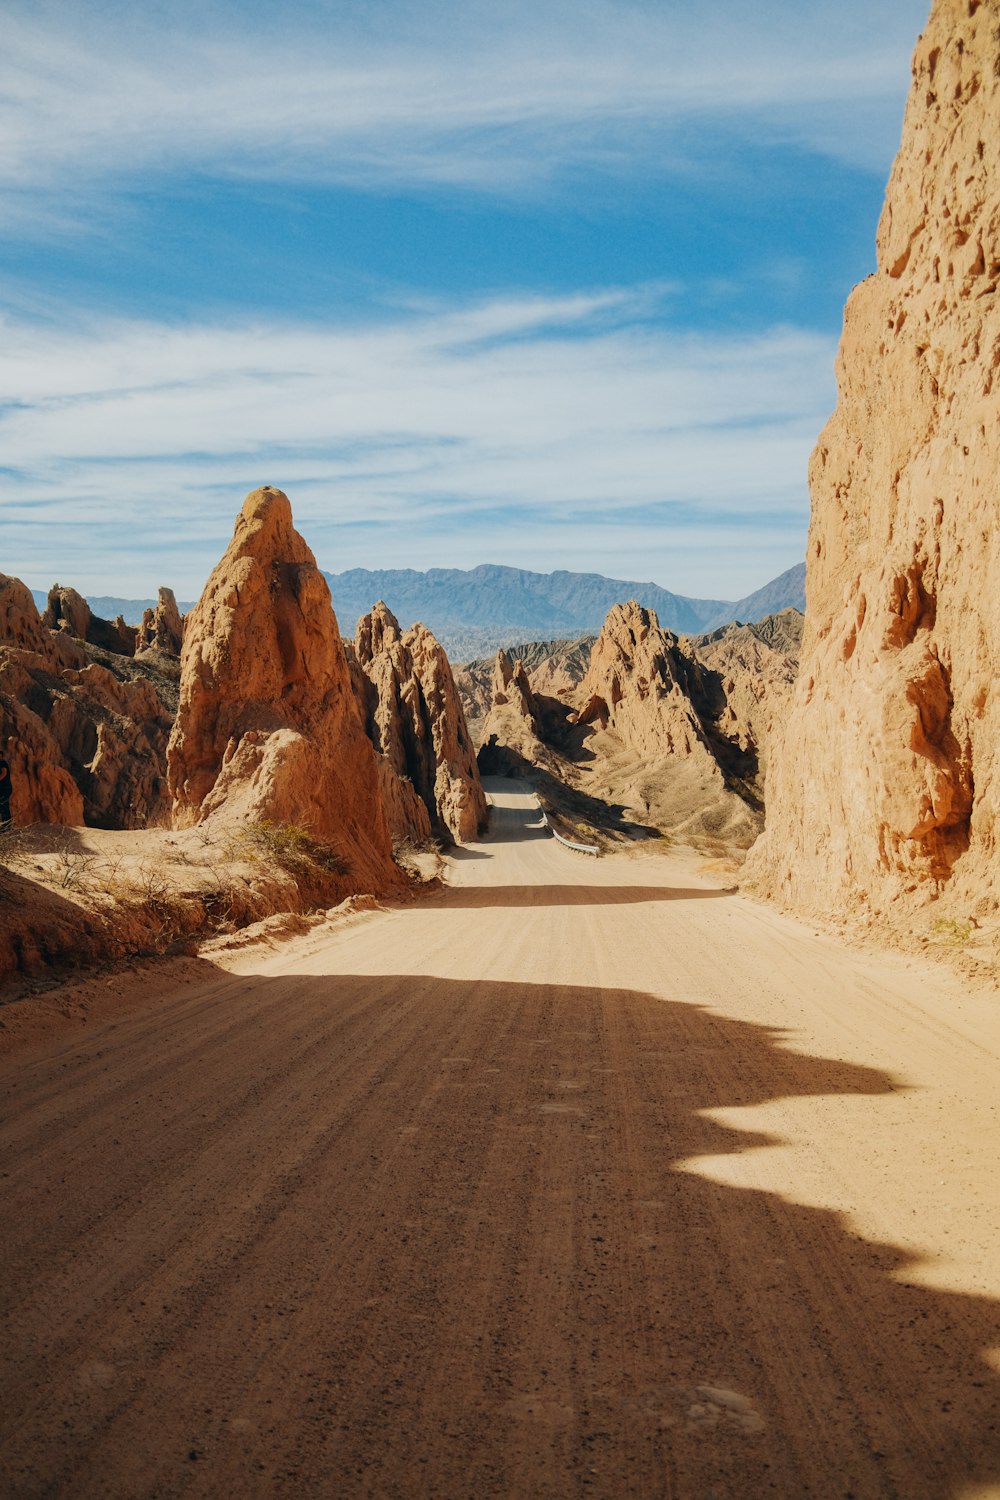 a desert landscape with a dirt road